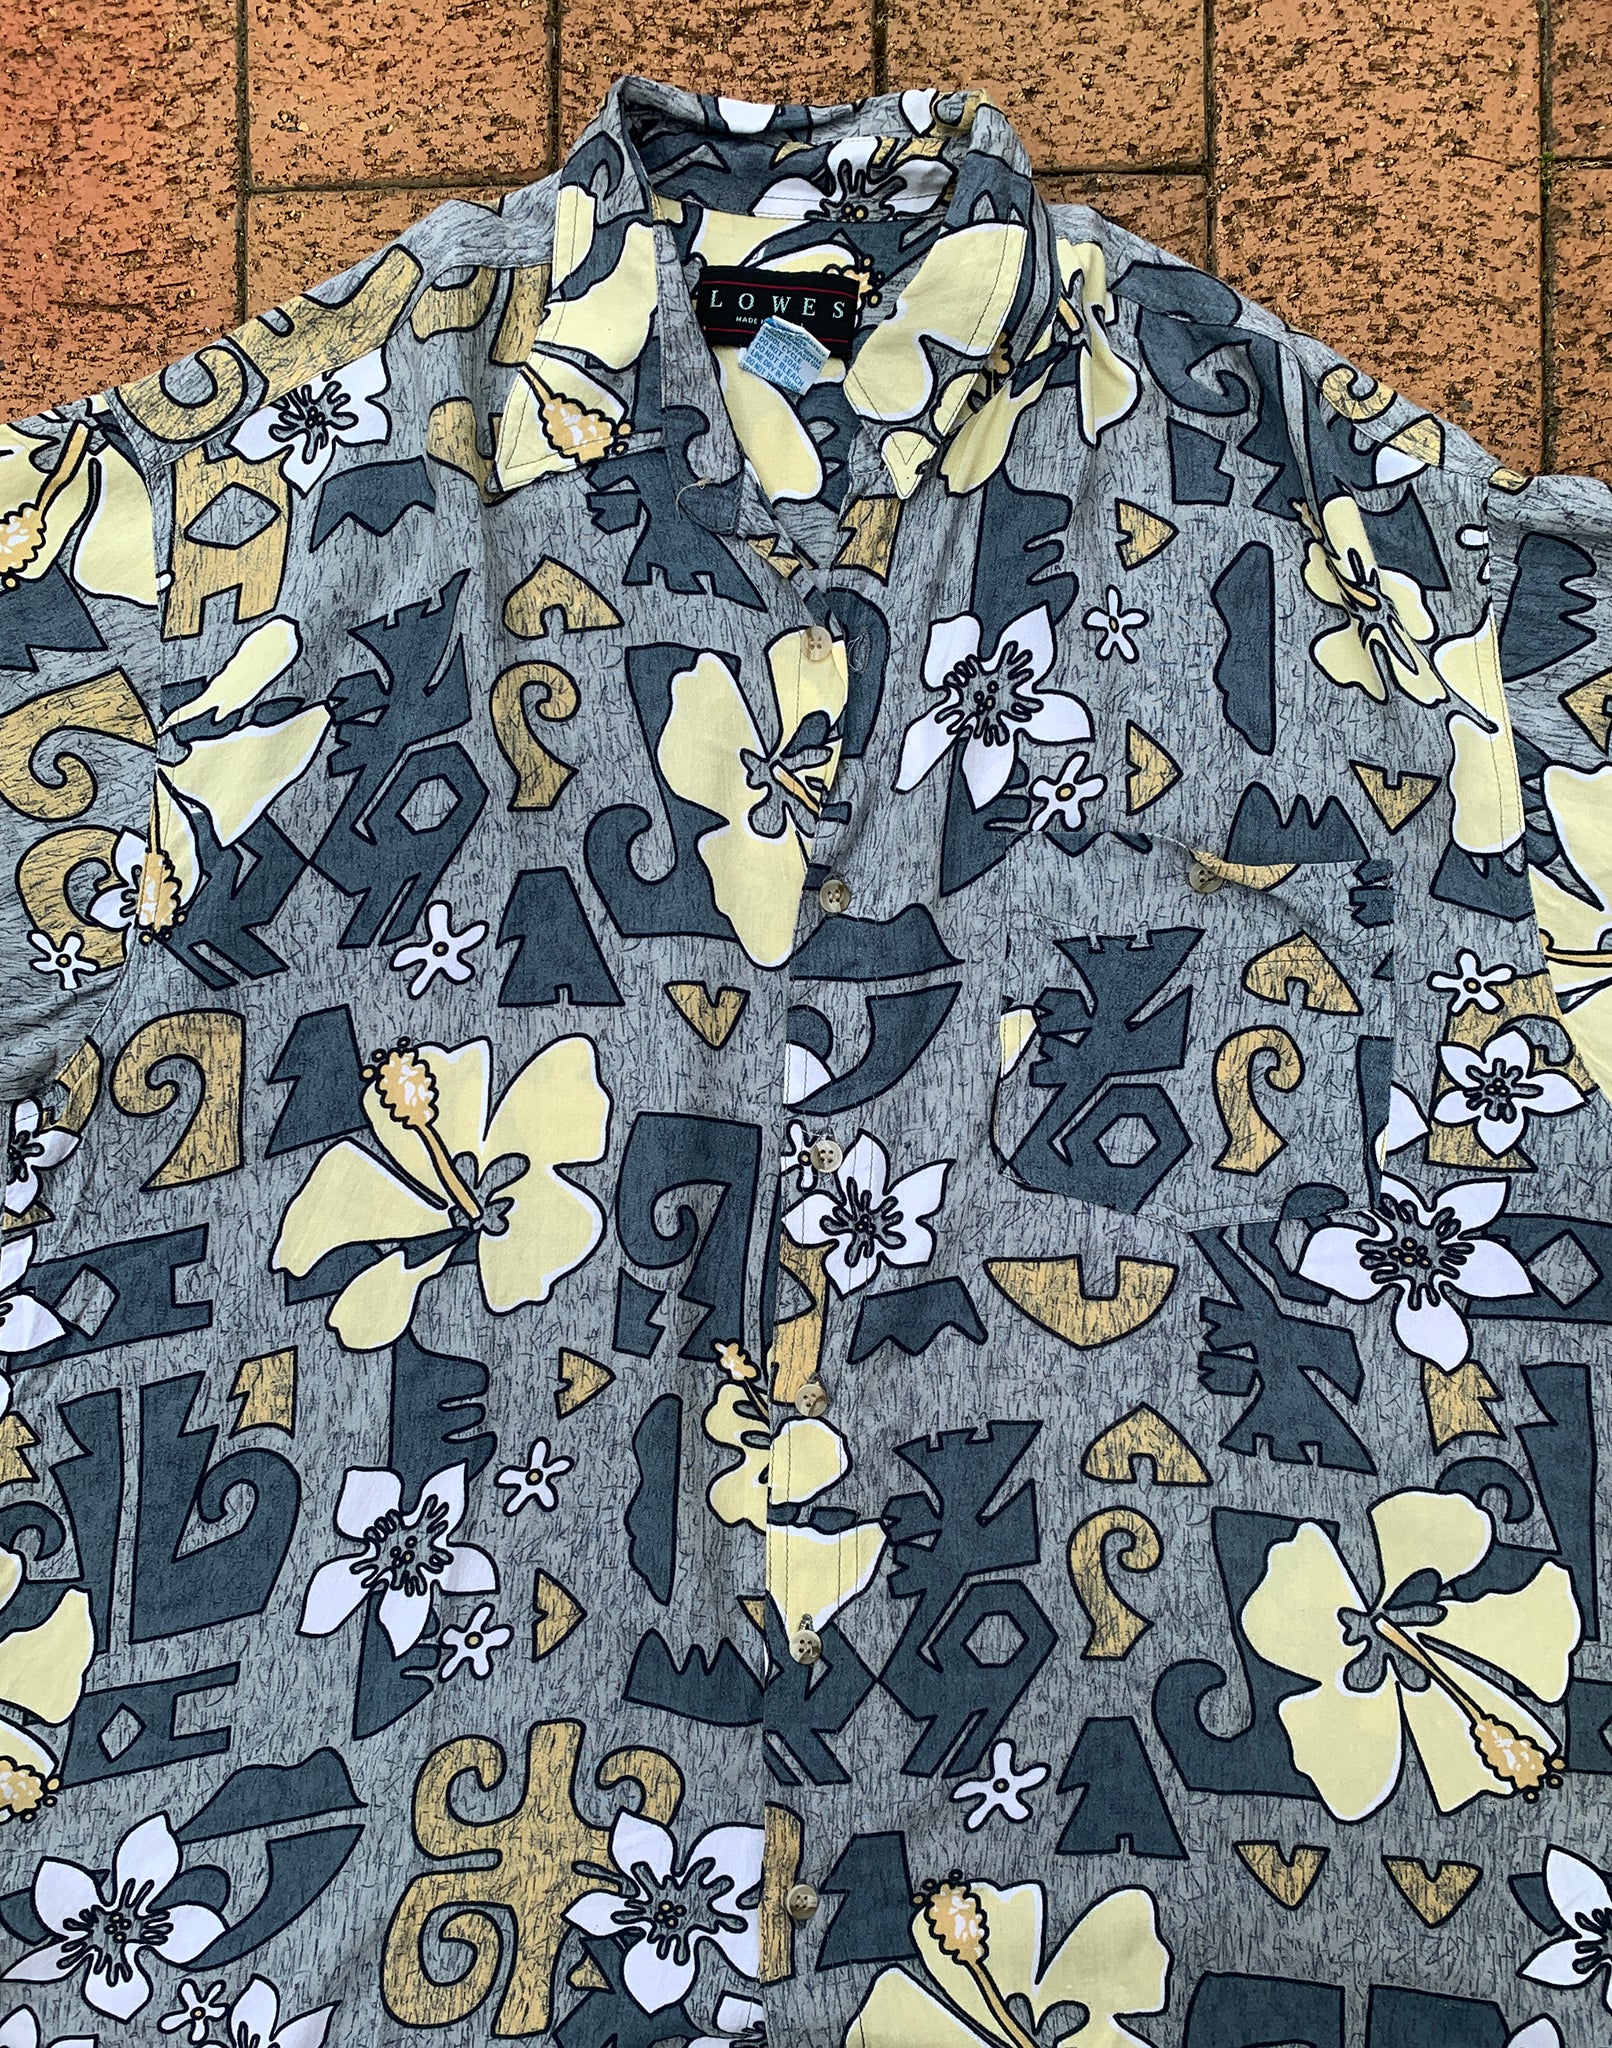 Vintage 90's Blue Yellow Retro Washed Floral Unisex Shirt - Size L